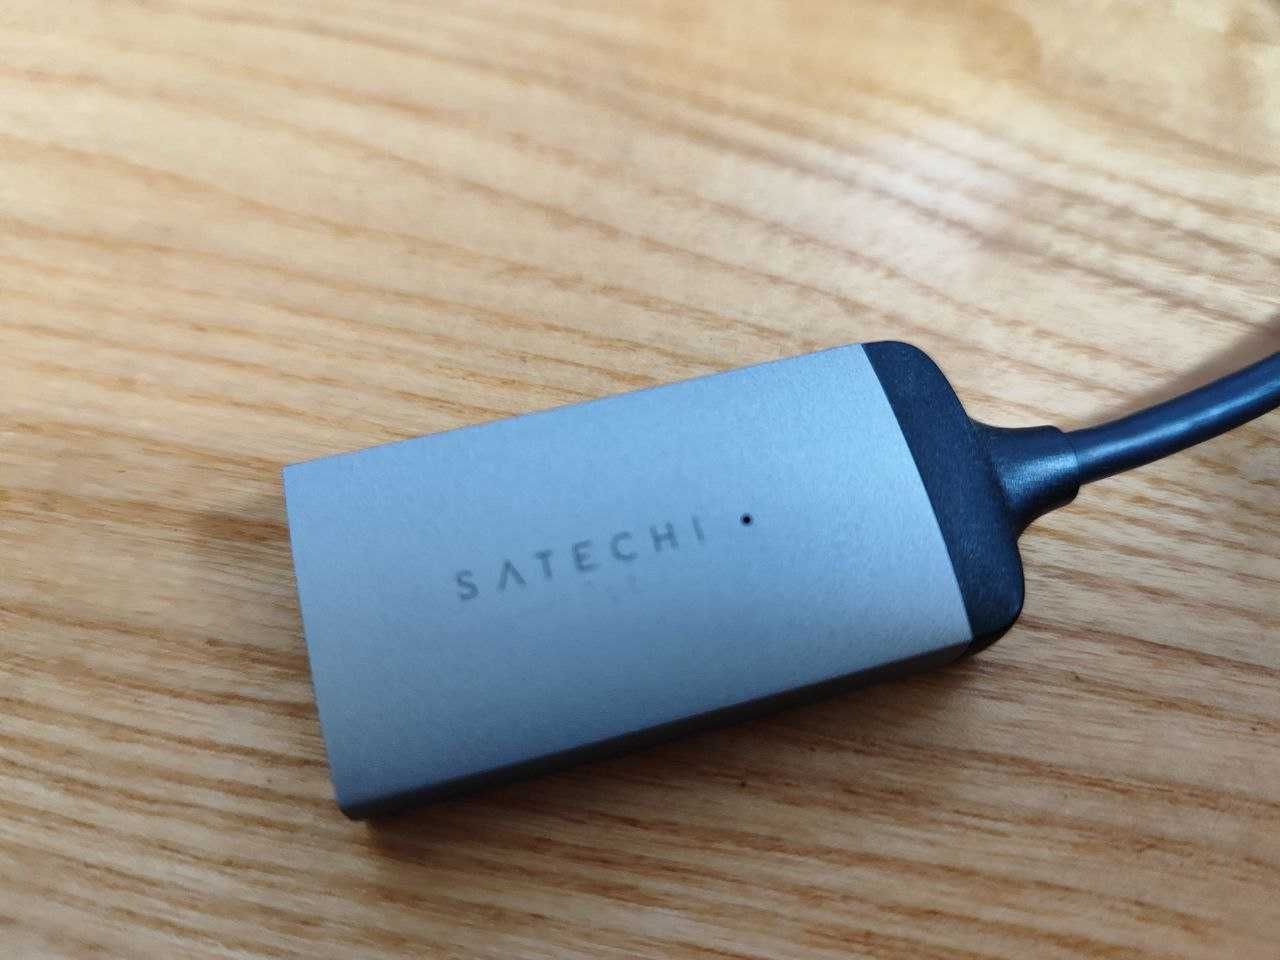 Satechi Type-C HDMI Adapter, Space Gray(ST-TC4KHAM)